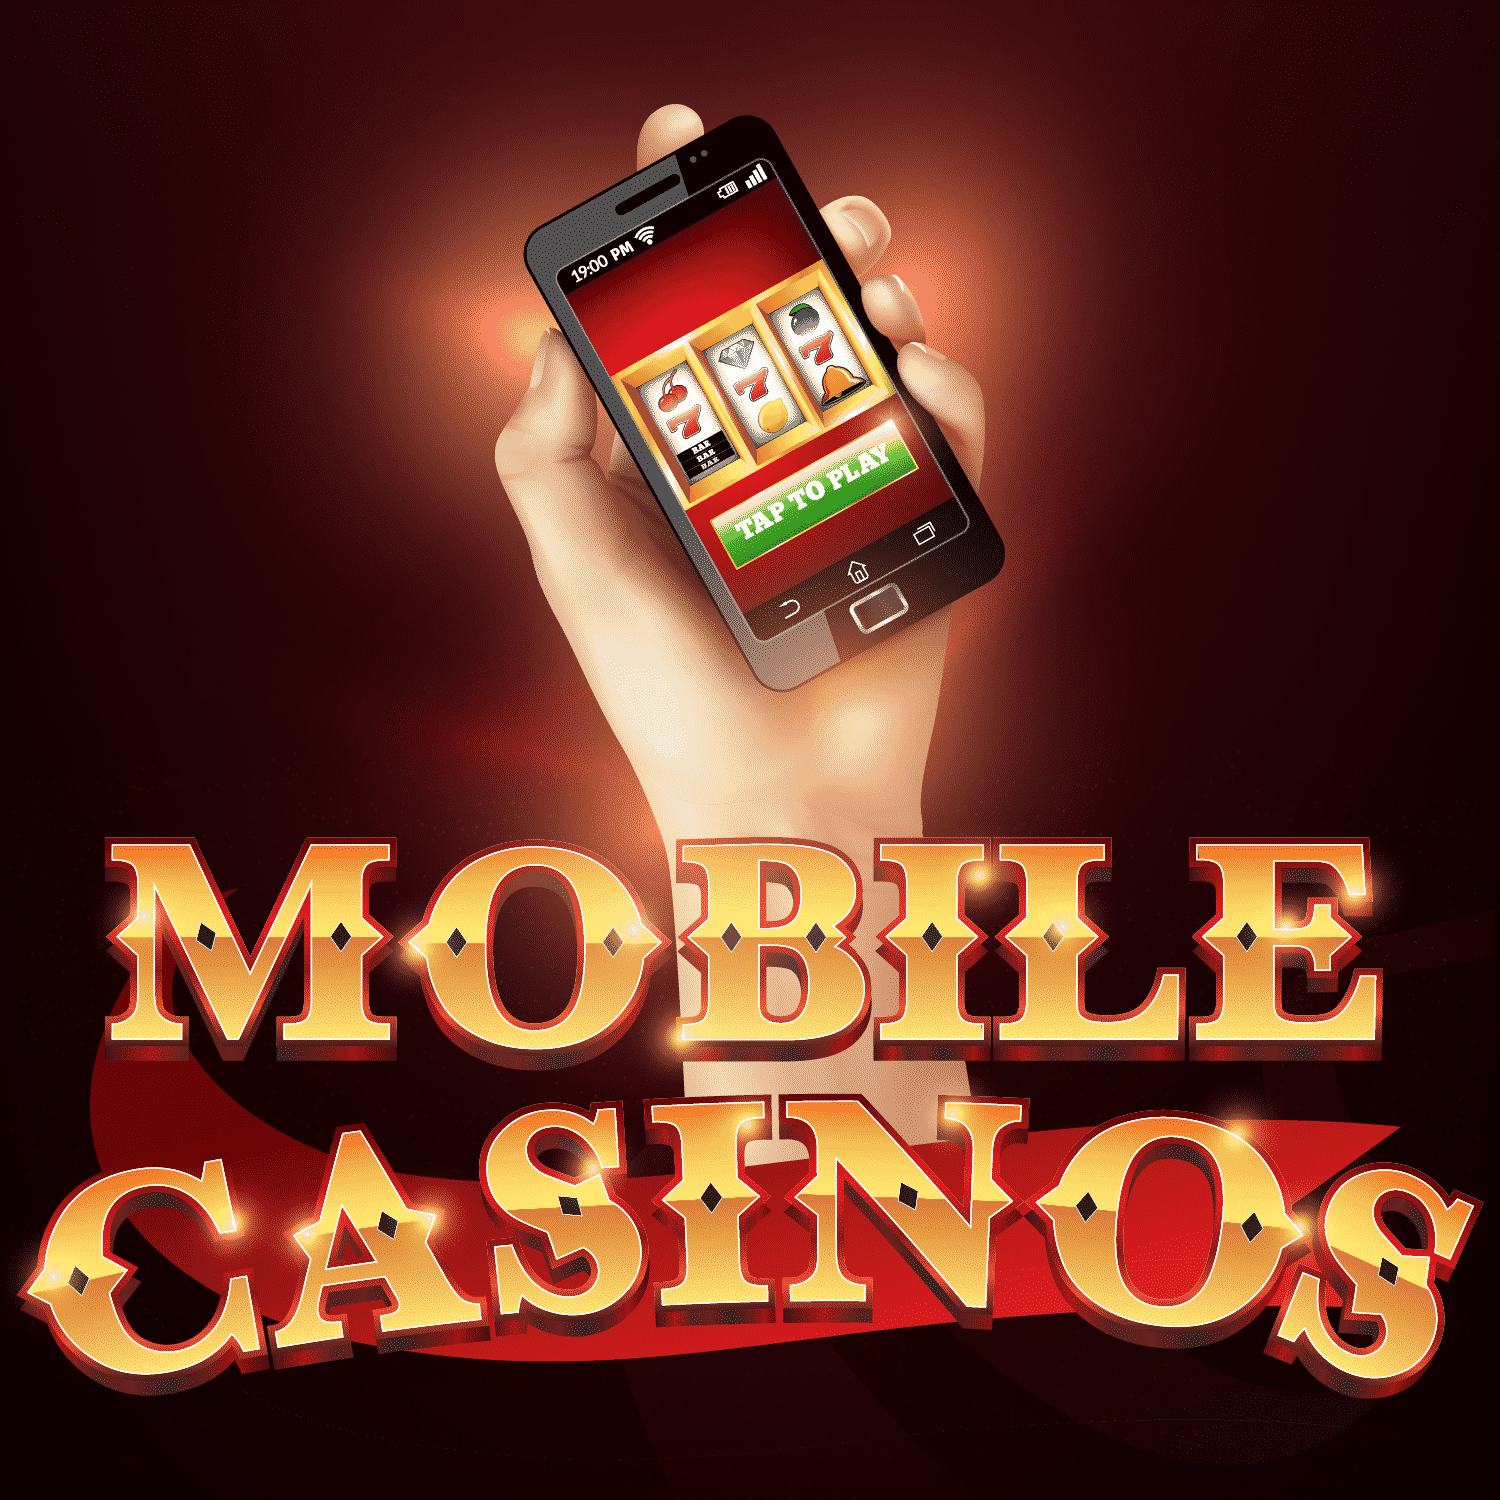 bonus code for mobile casino